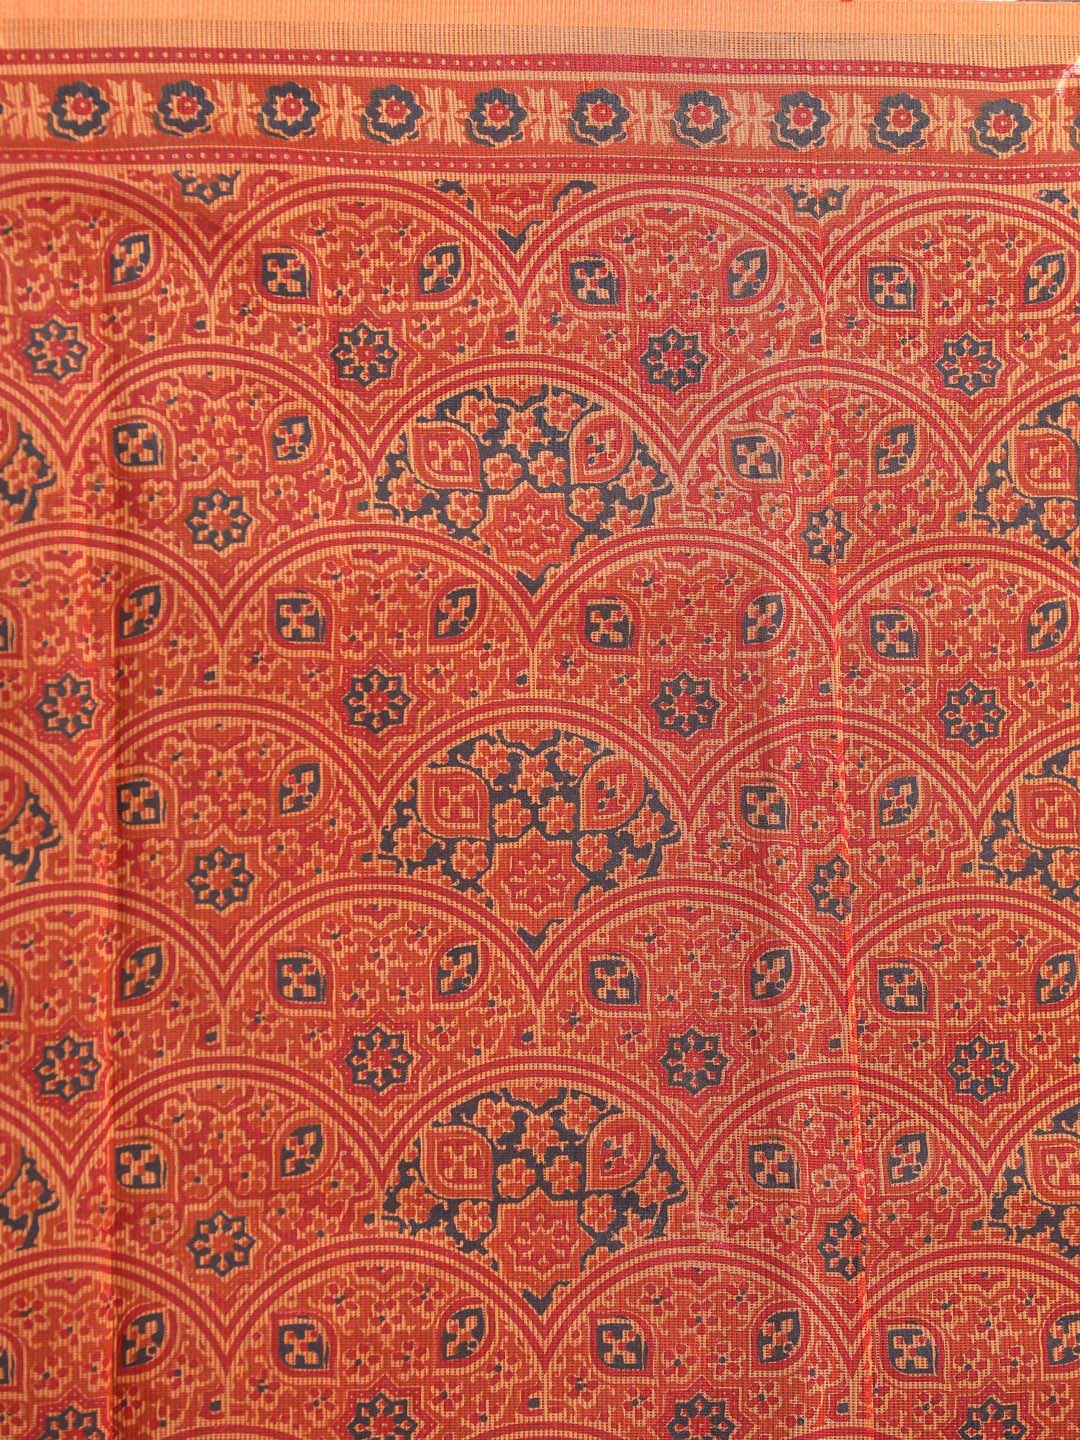 Indethnic Printed Super Net Saree in Mustard - Saree Detail View